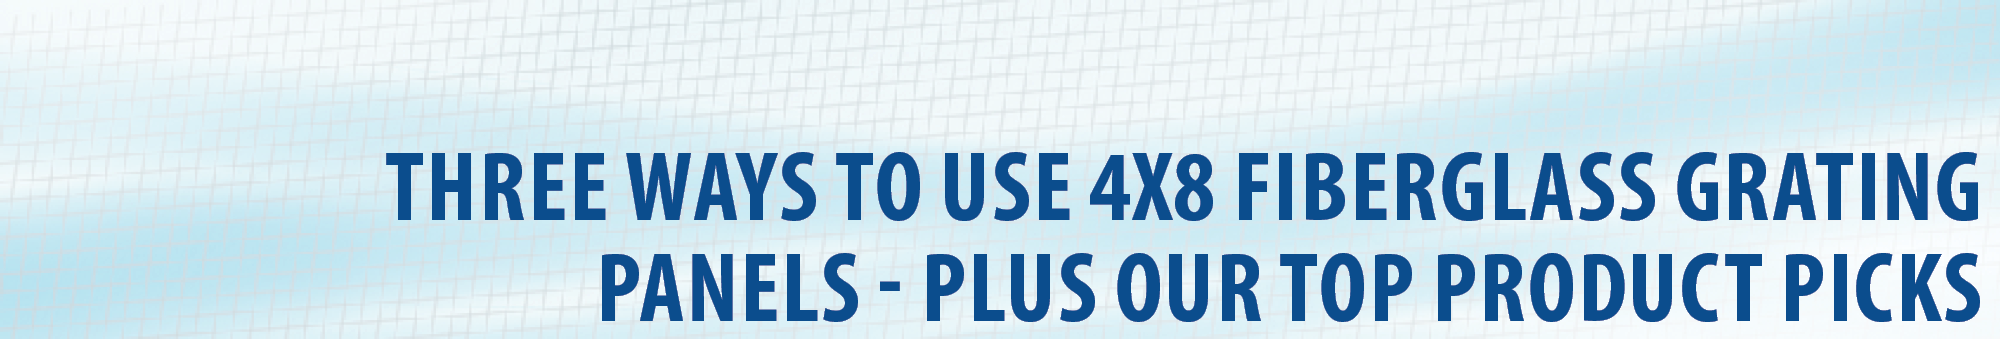 Three Popular Ways to Use 4x8 Fiberglass Grating Panels - Plus Our Top Product Picks